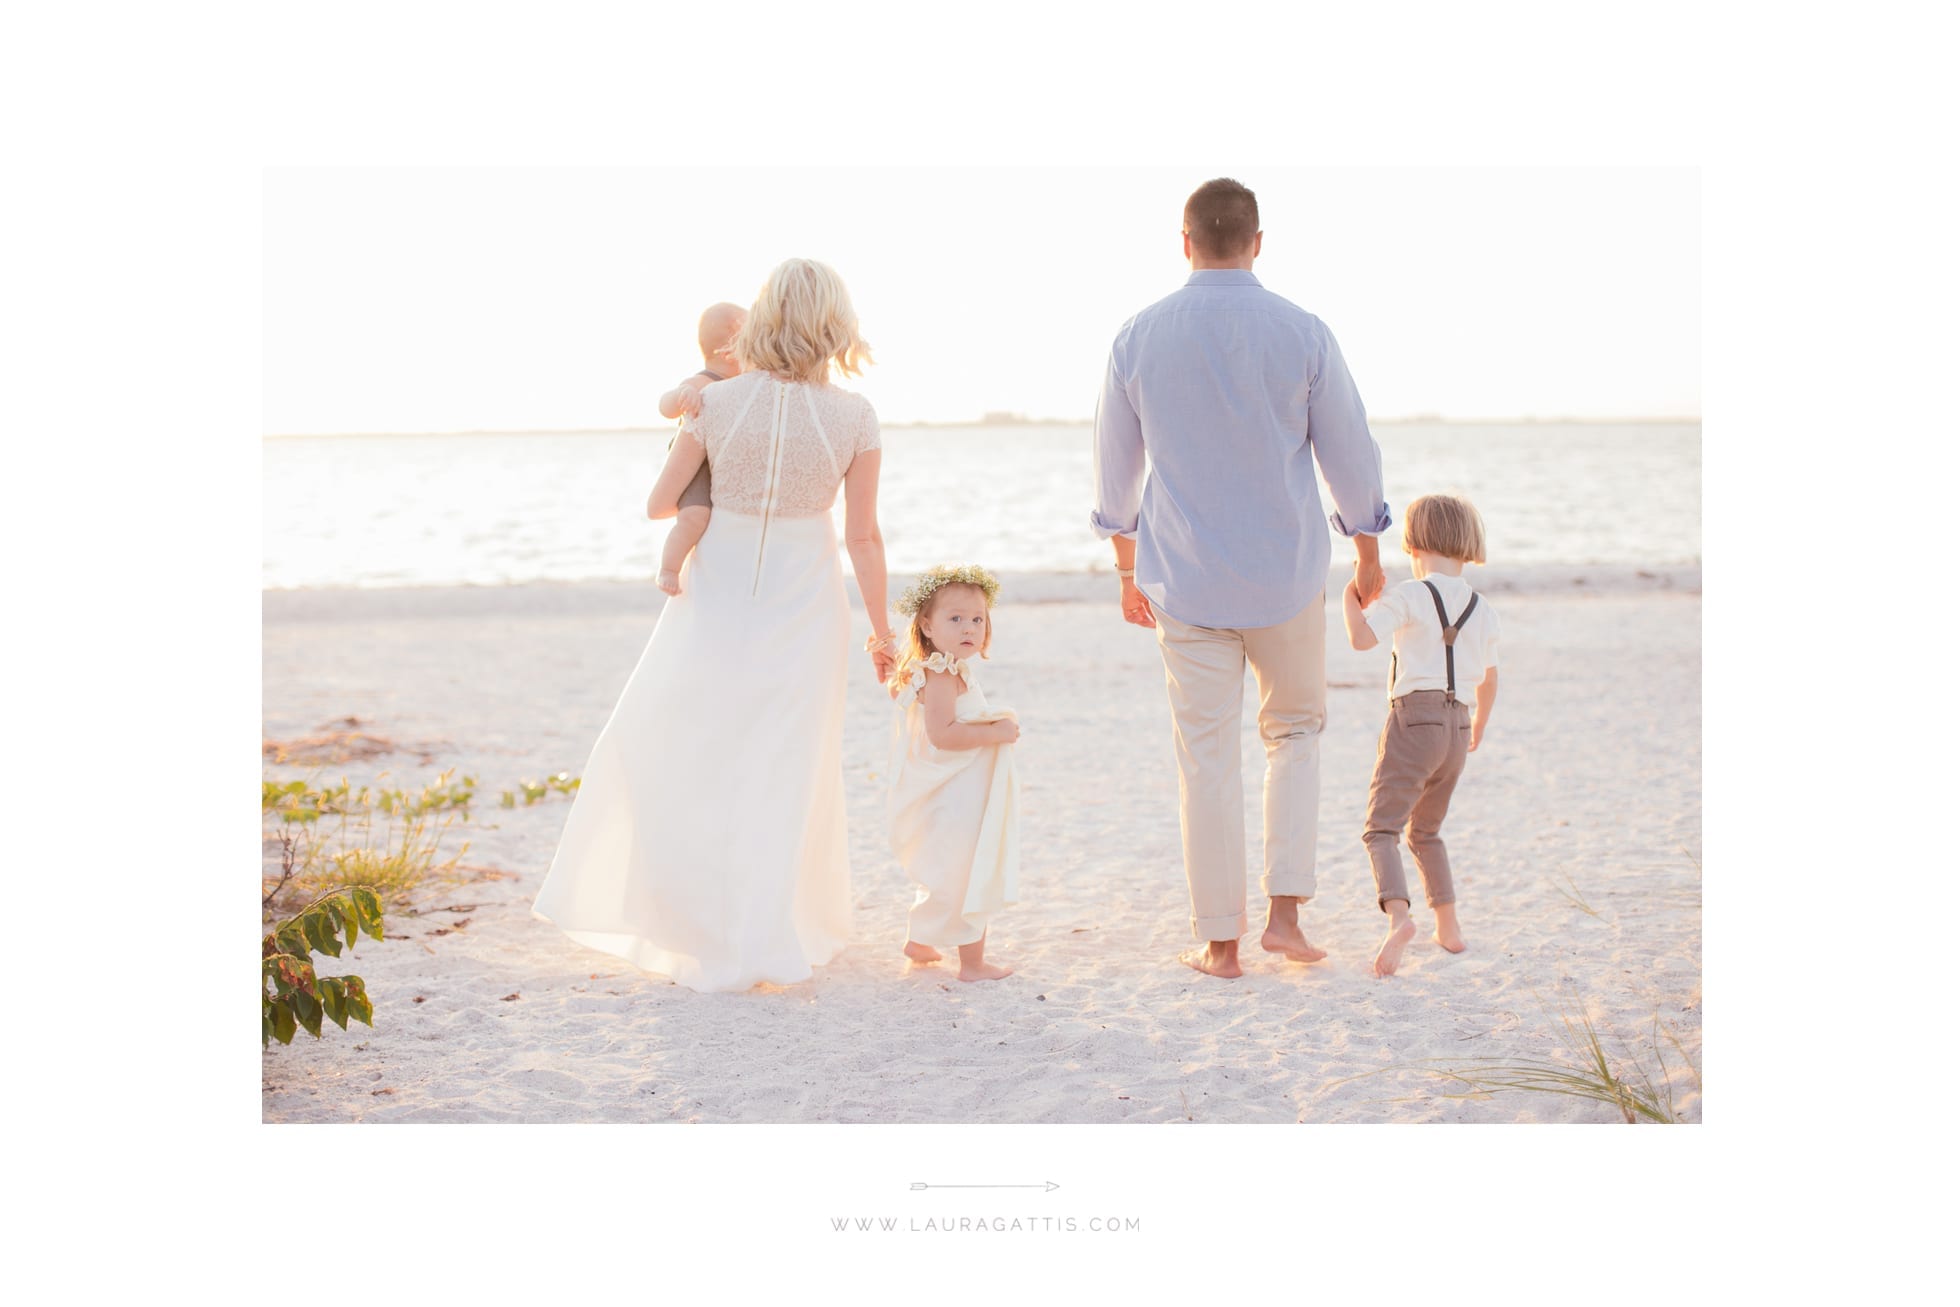 film style family beach photography | laura gattis photography